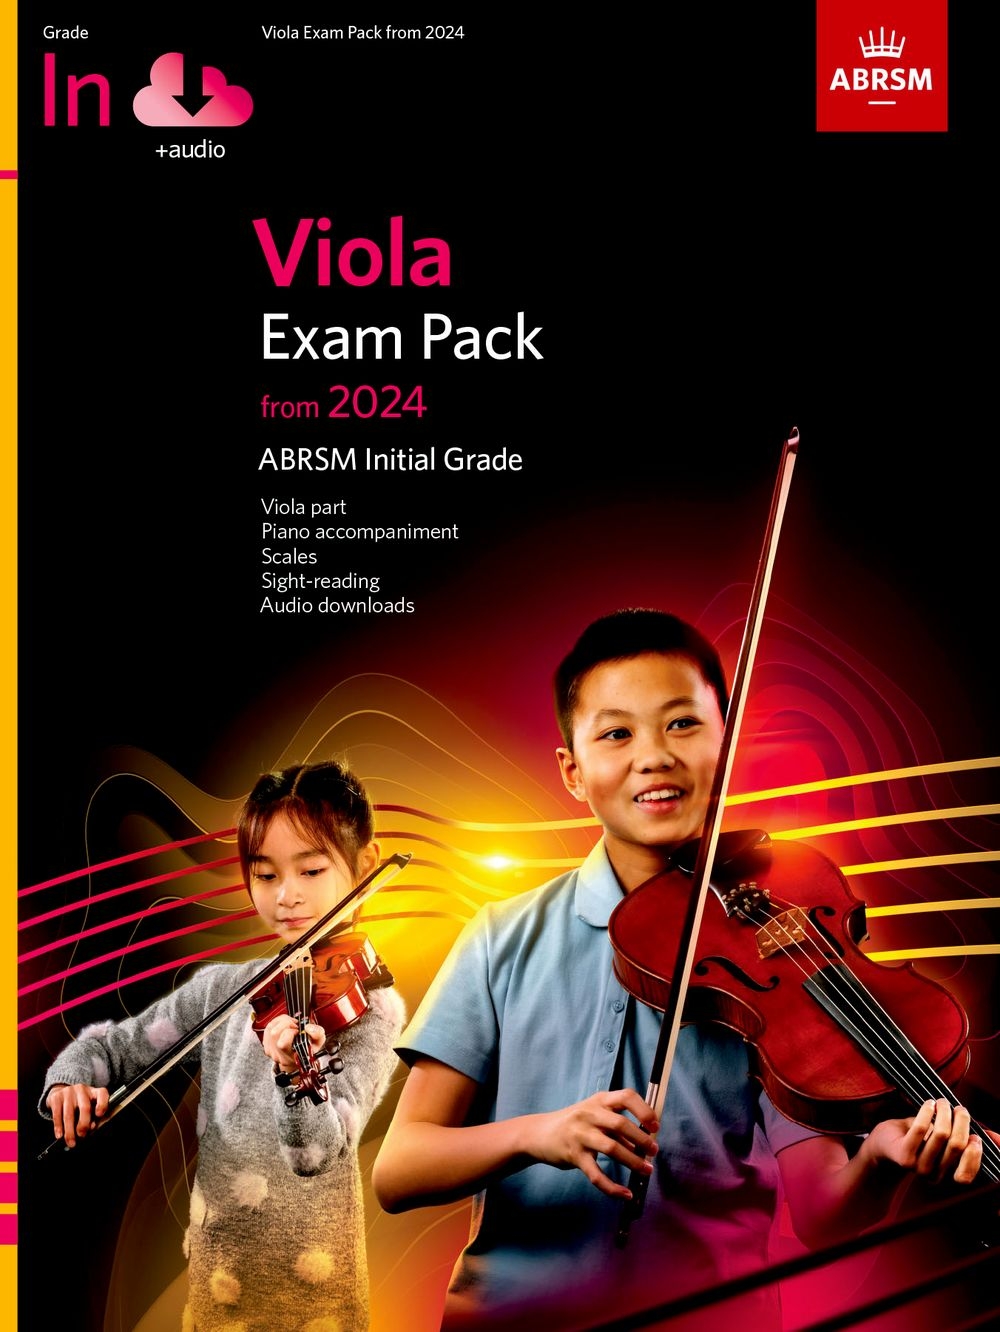 Viola Exam Pack from 2024, Initial Grade